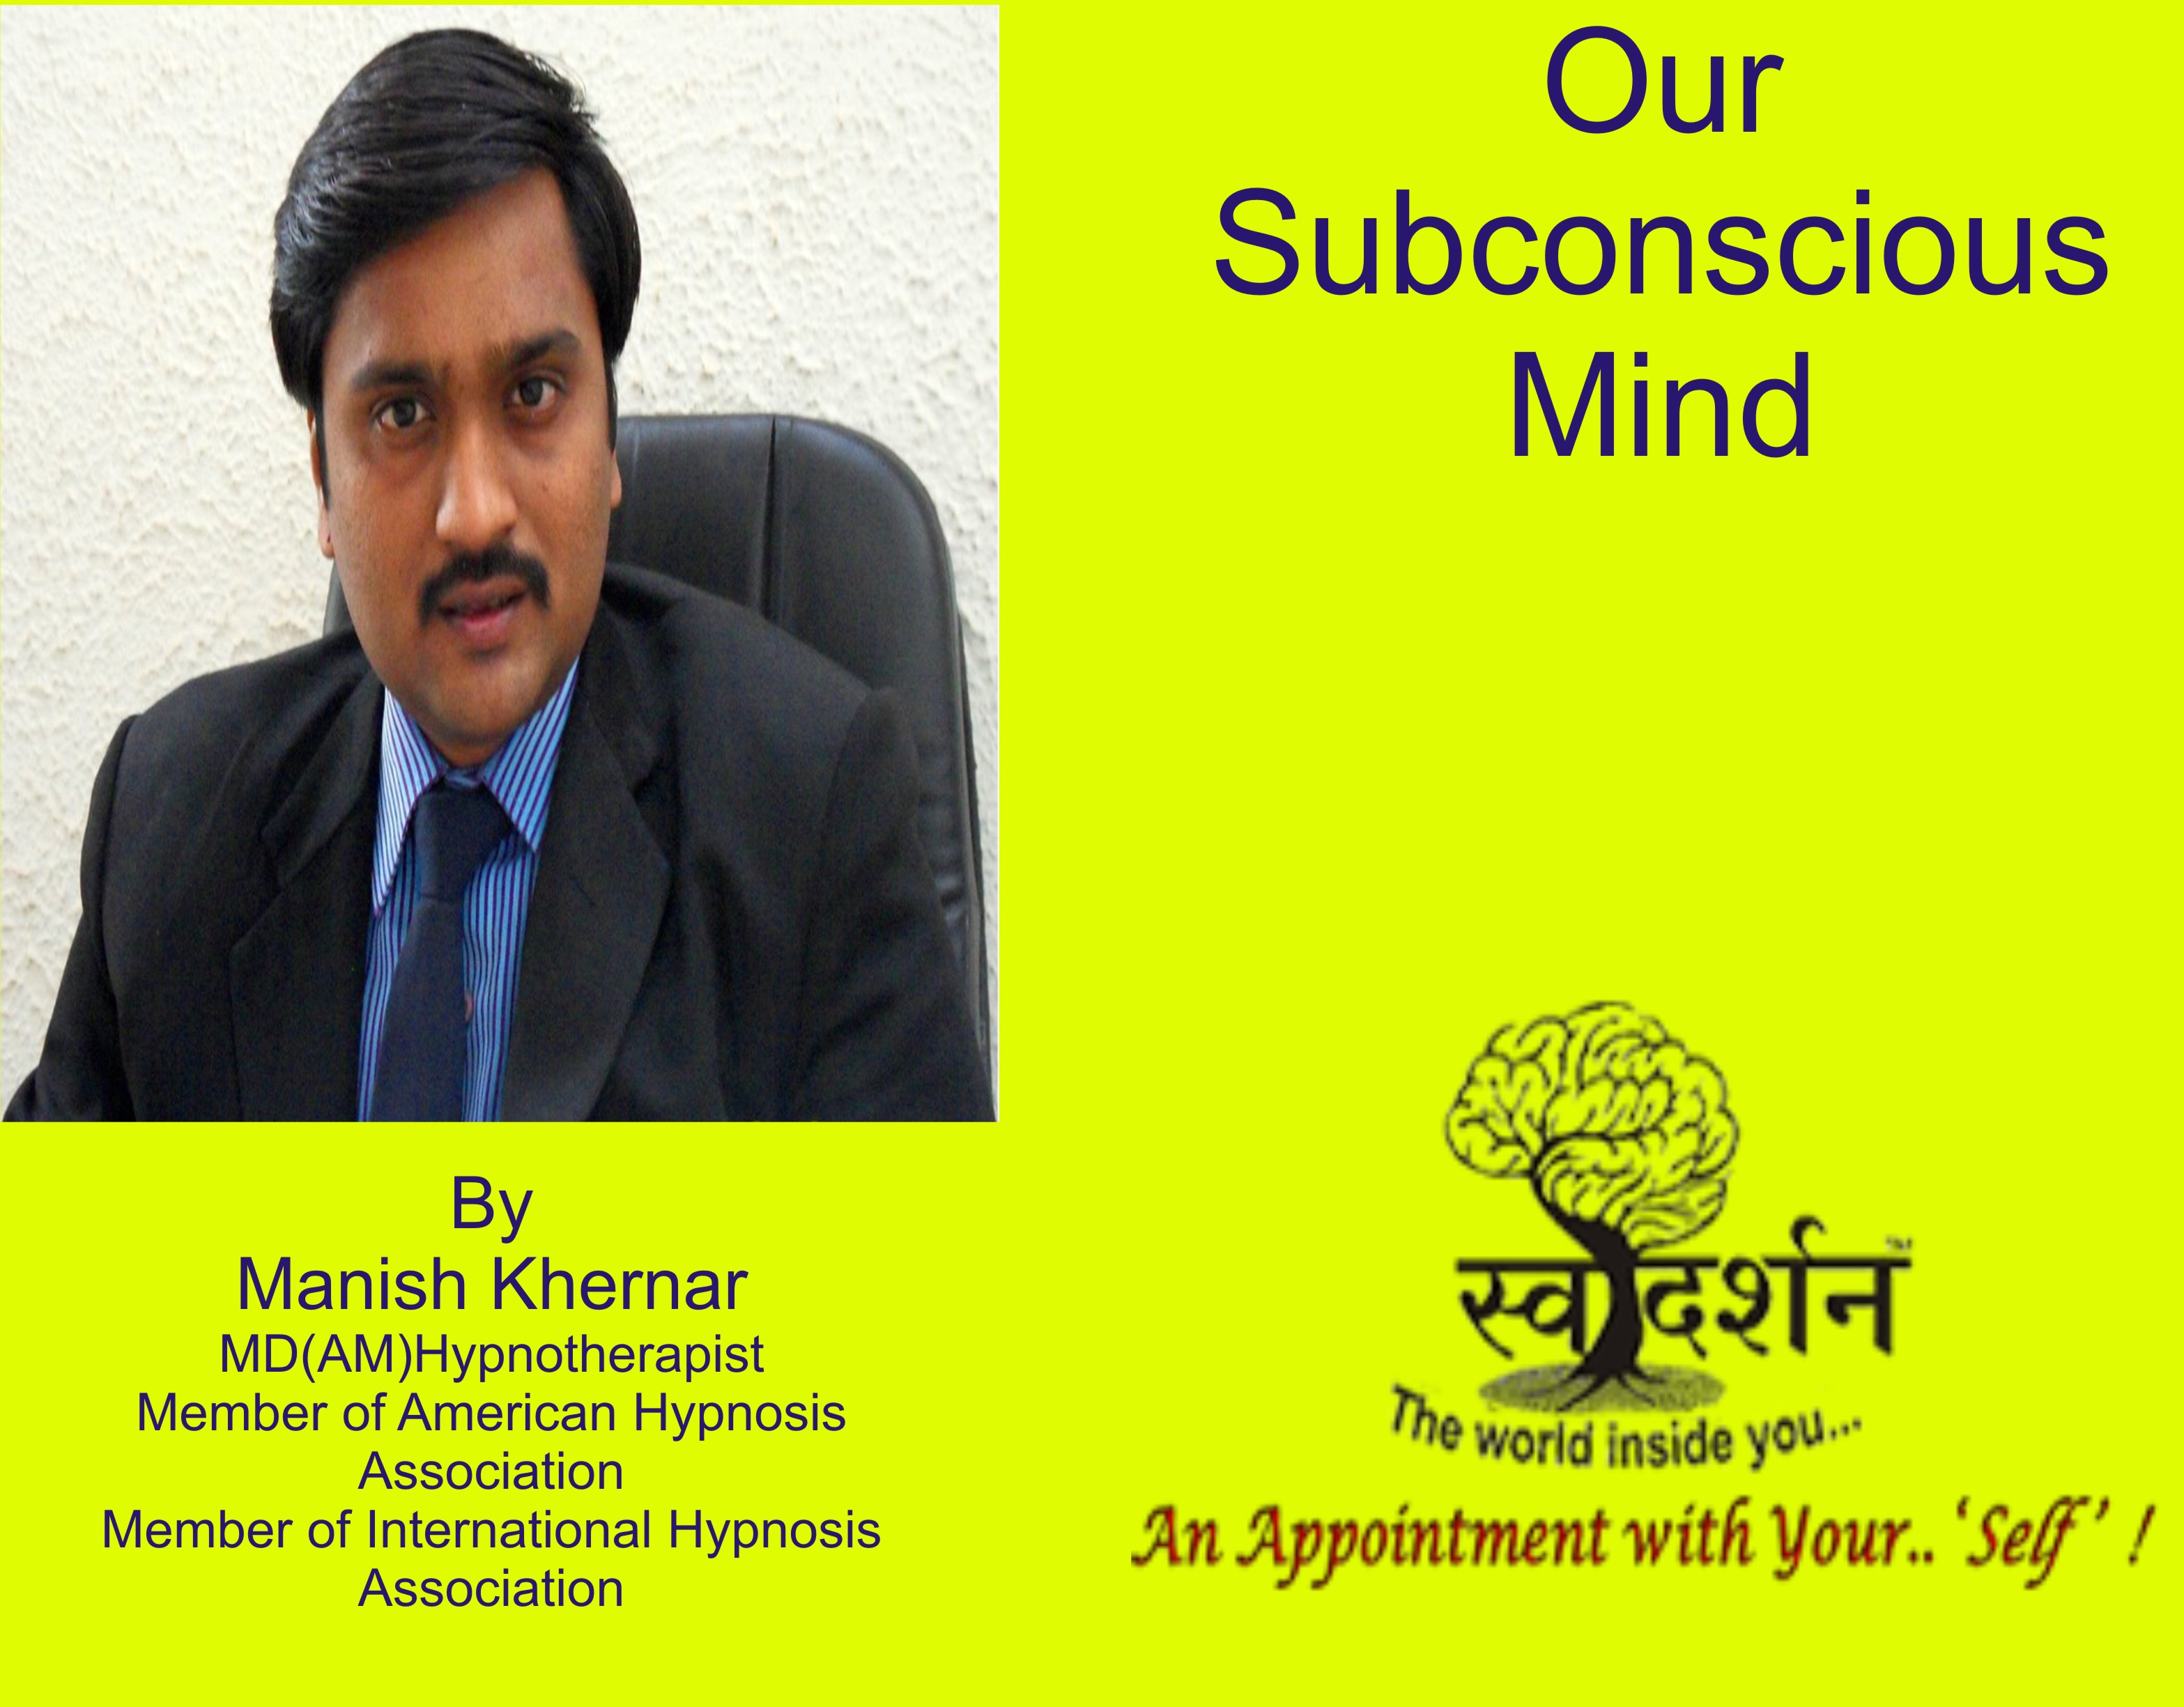 Our Subconscious Mind